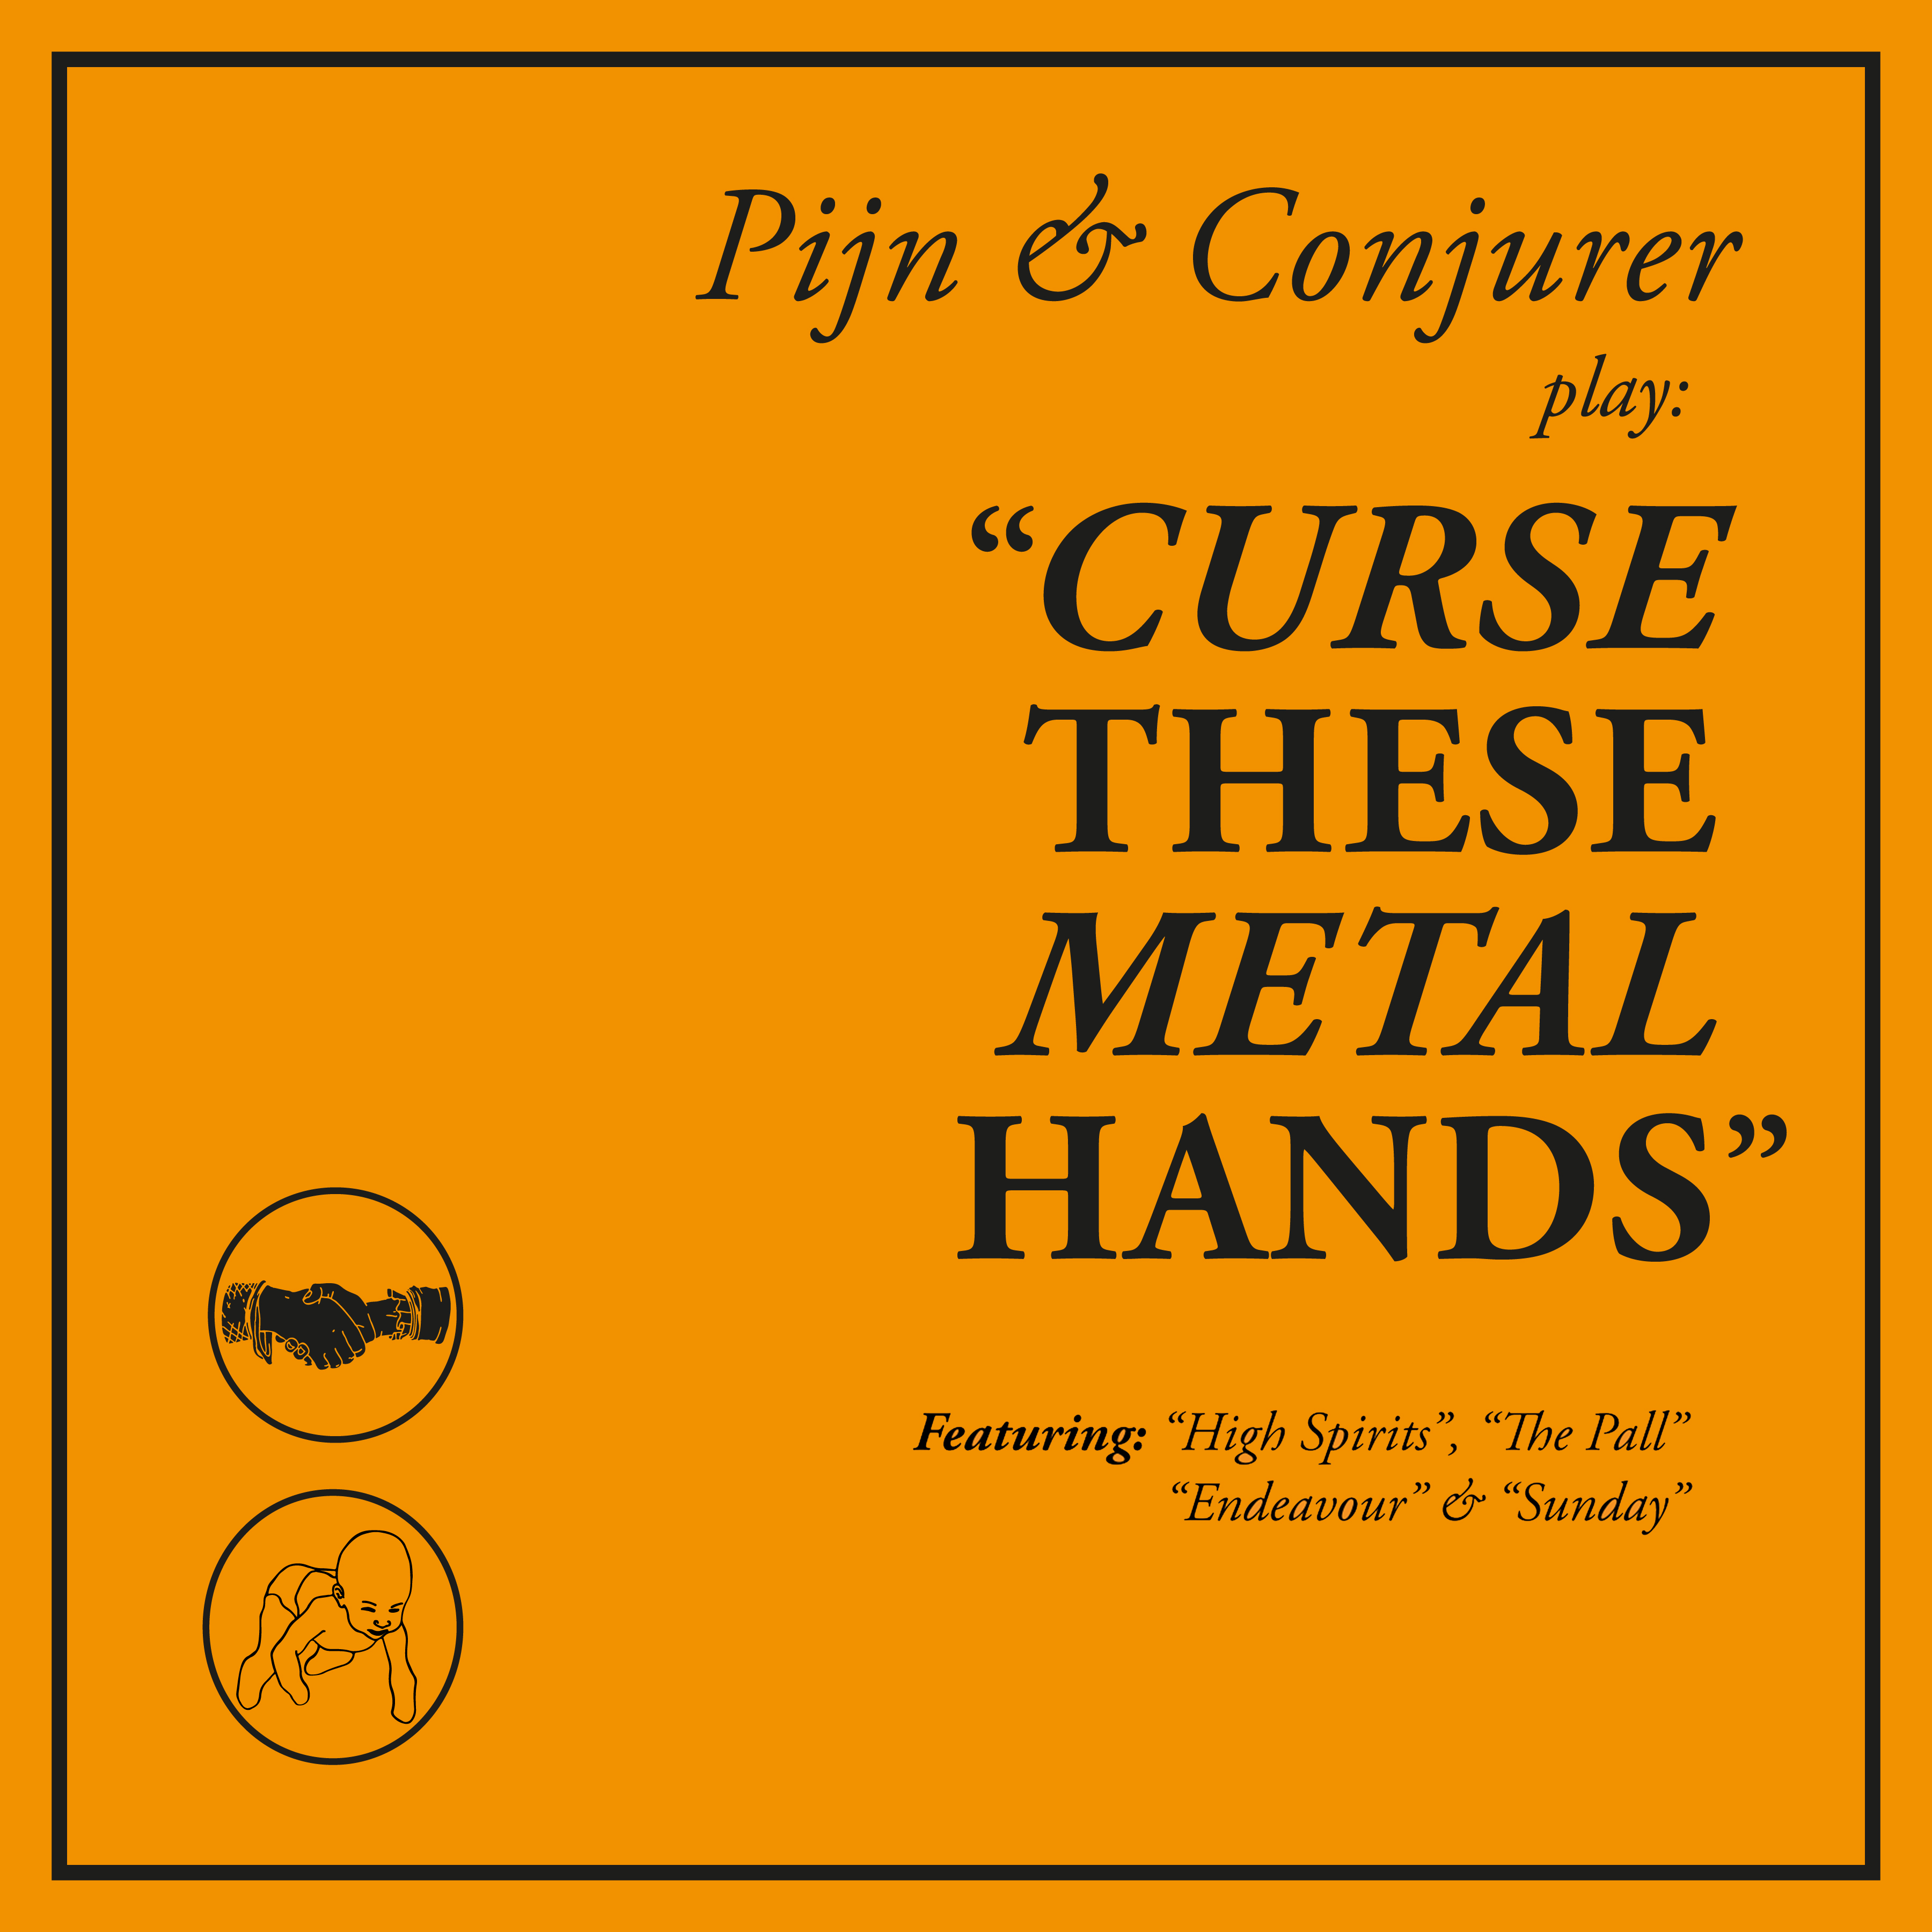 Album Art for "Curse These Metal Hands" by Pijn & Conjurer